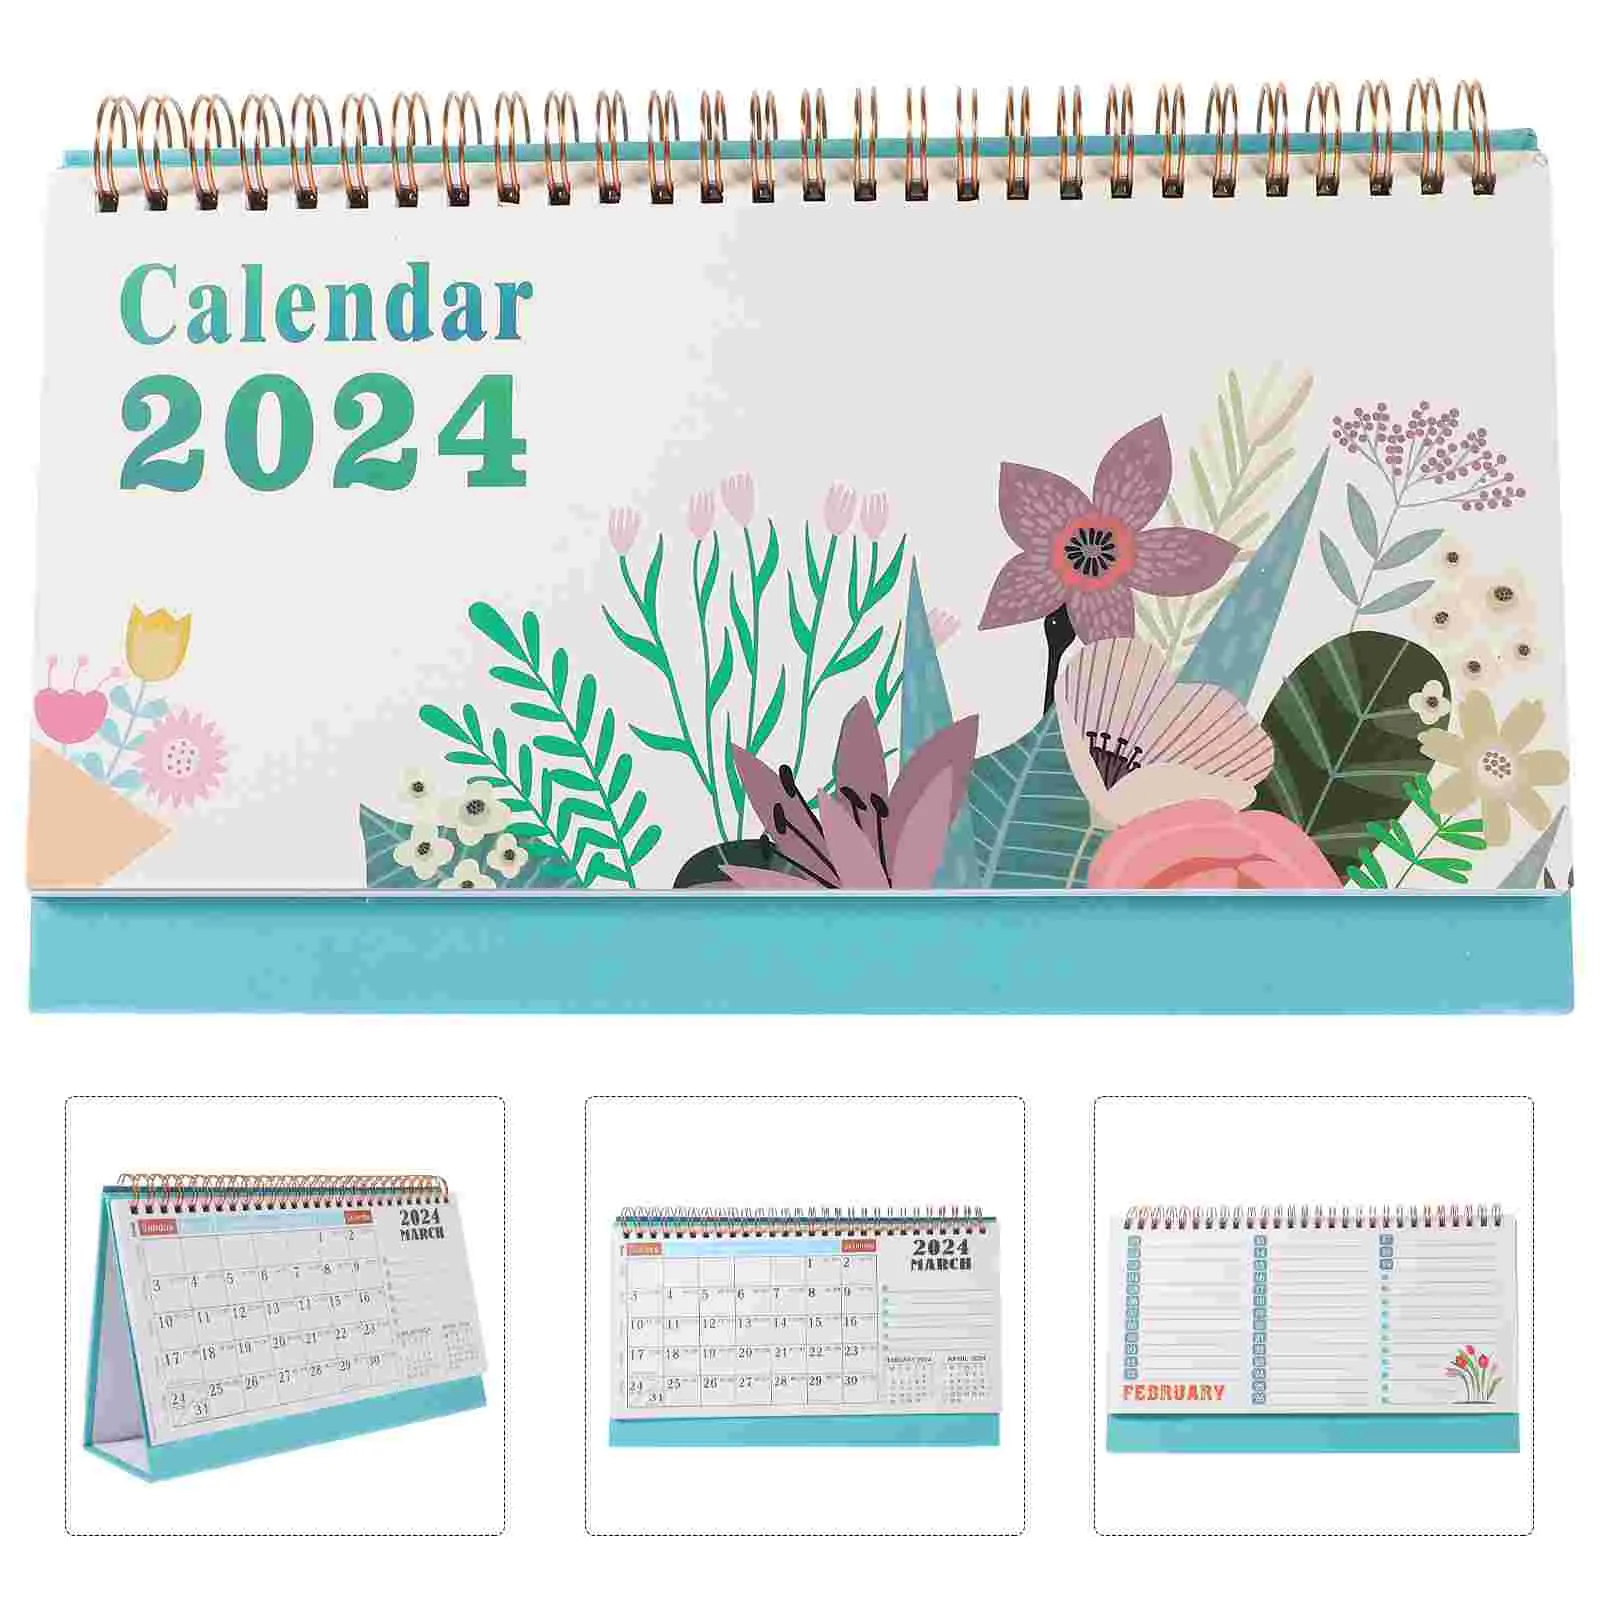 Desk Calendar Schedule Planner Calendar Ornament Delicate Calendar Home Office Desk Calendar 2024 wall calendar the new year delicate hanging tearable paper home chinese style